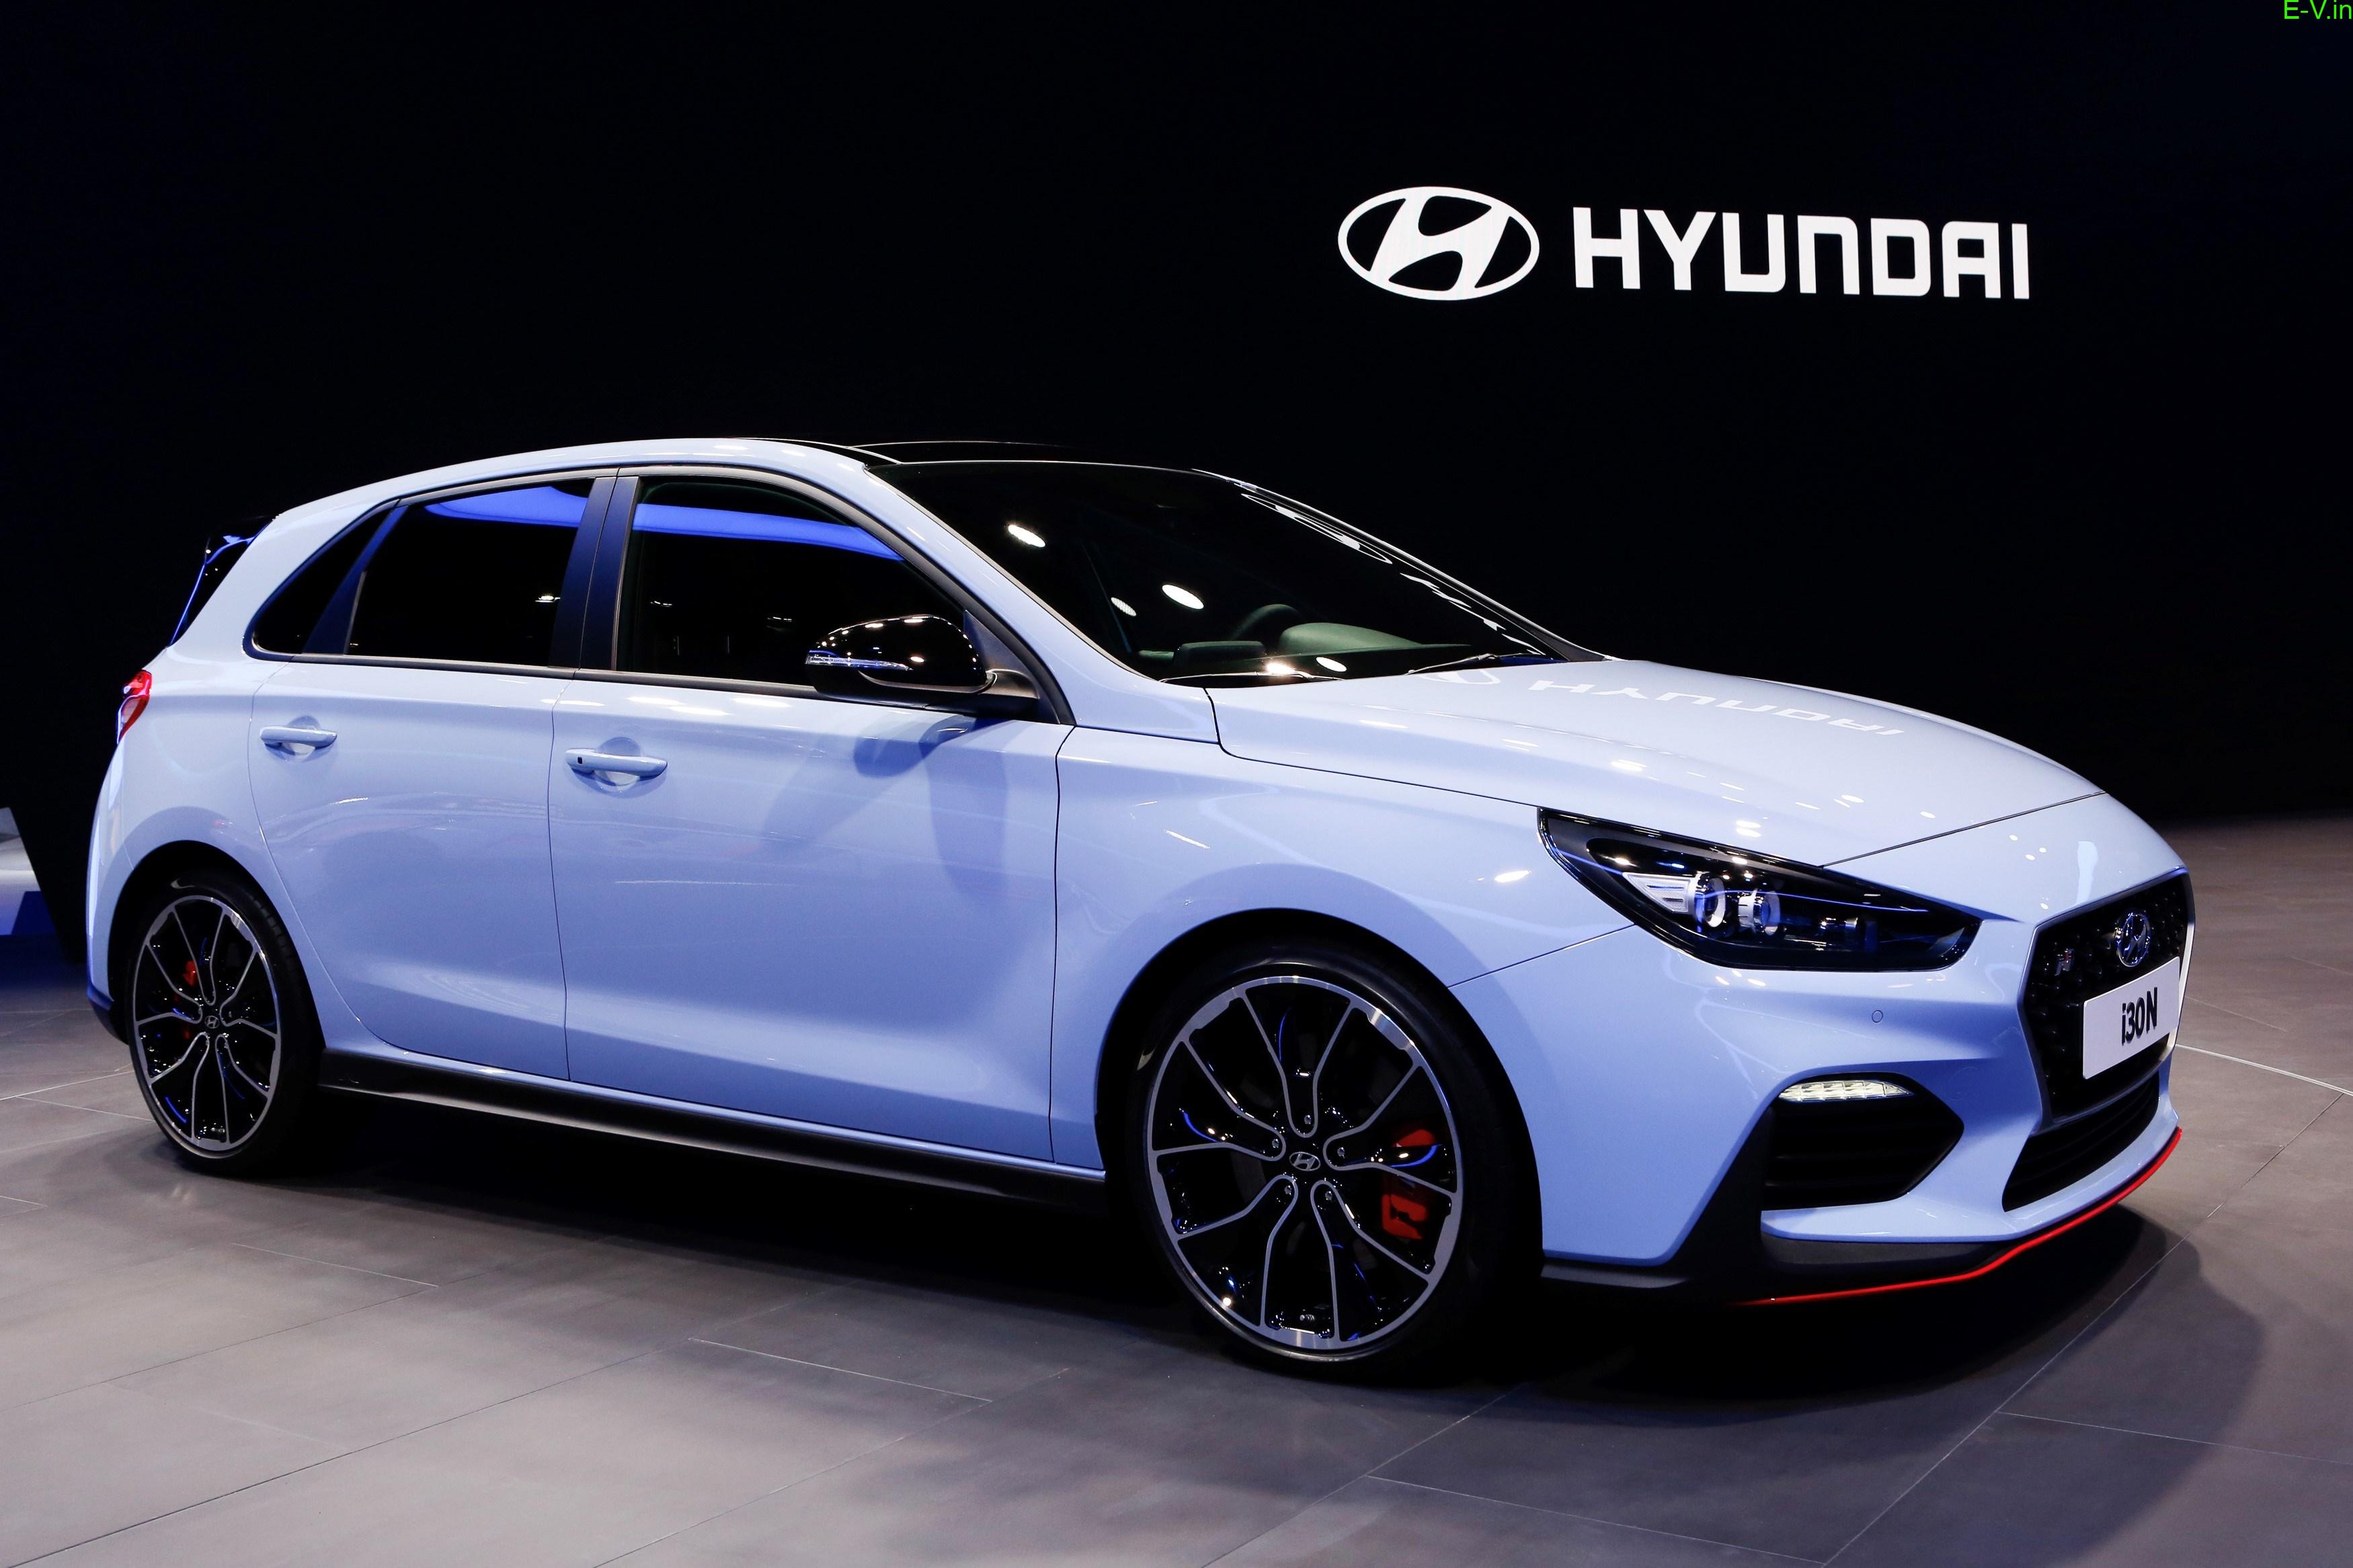 Hyundai presenting new EV Concept at Frankfurt